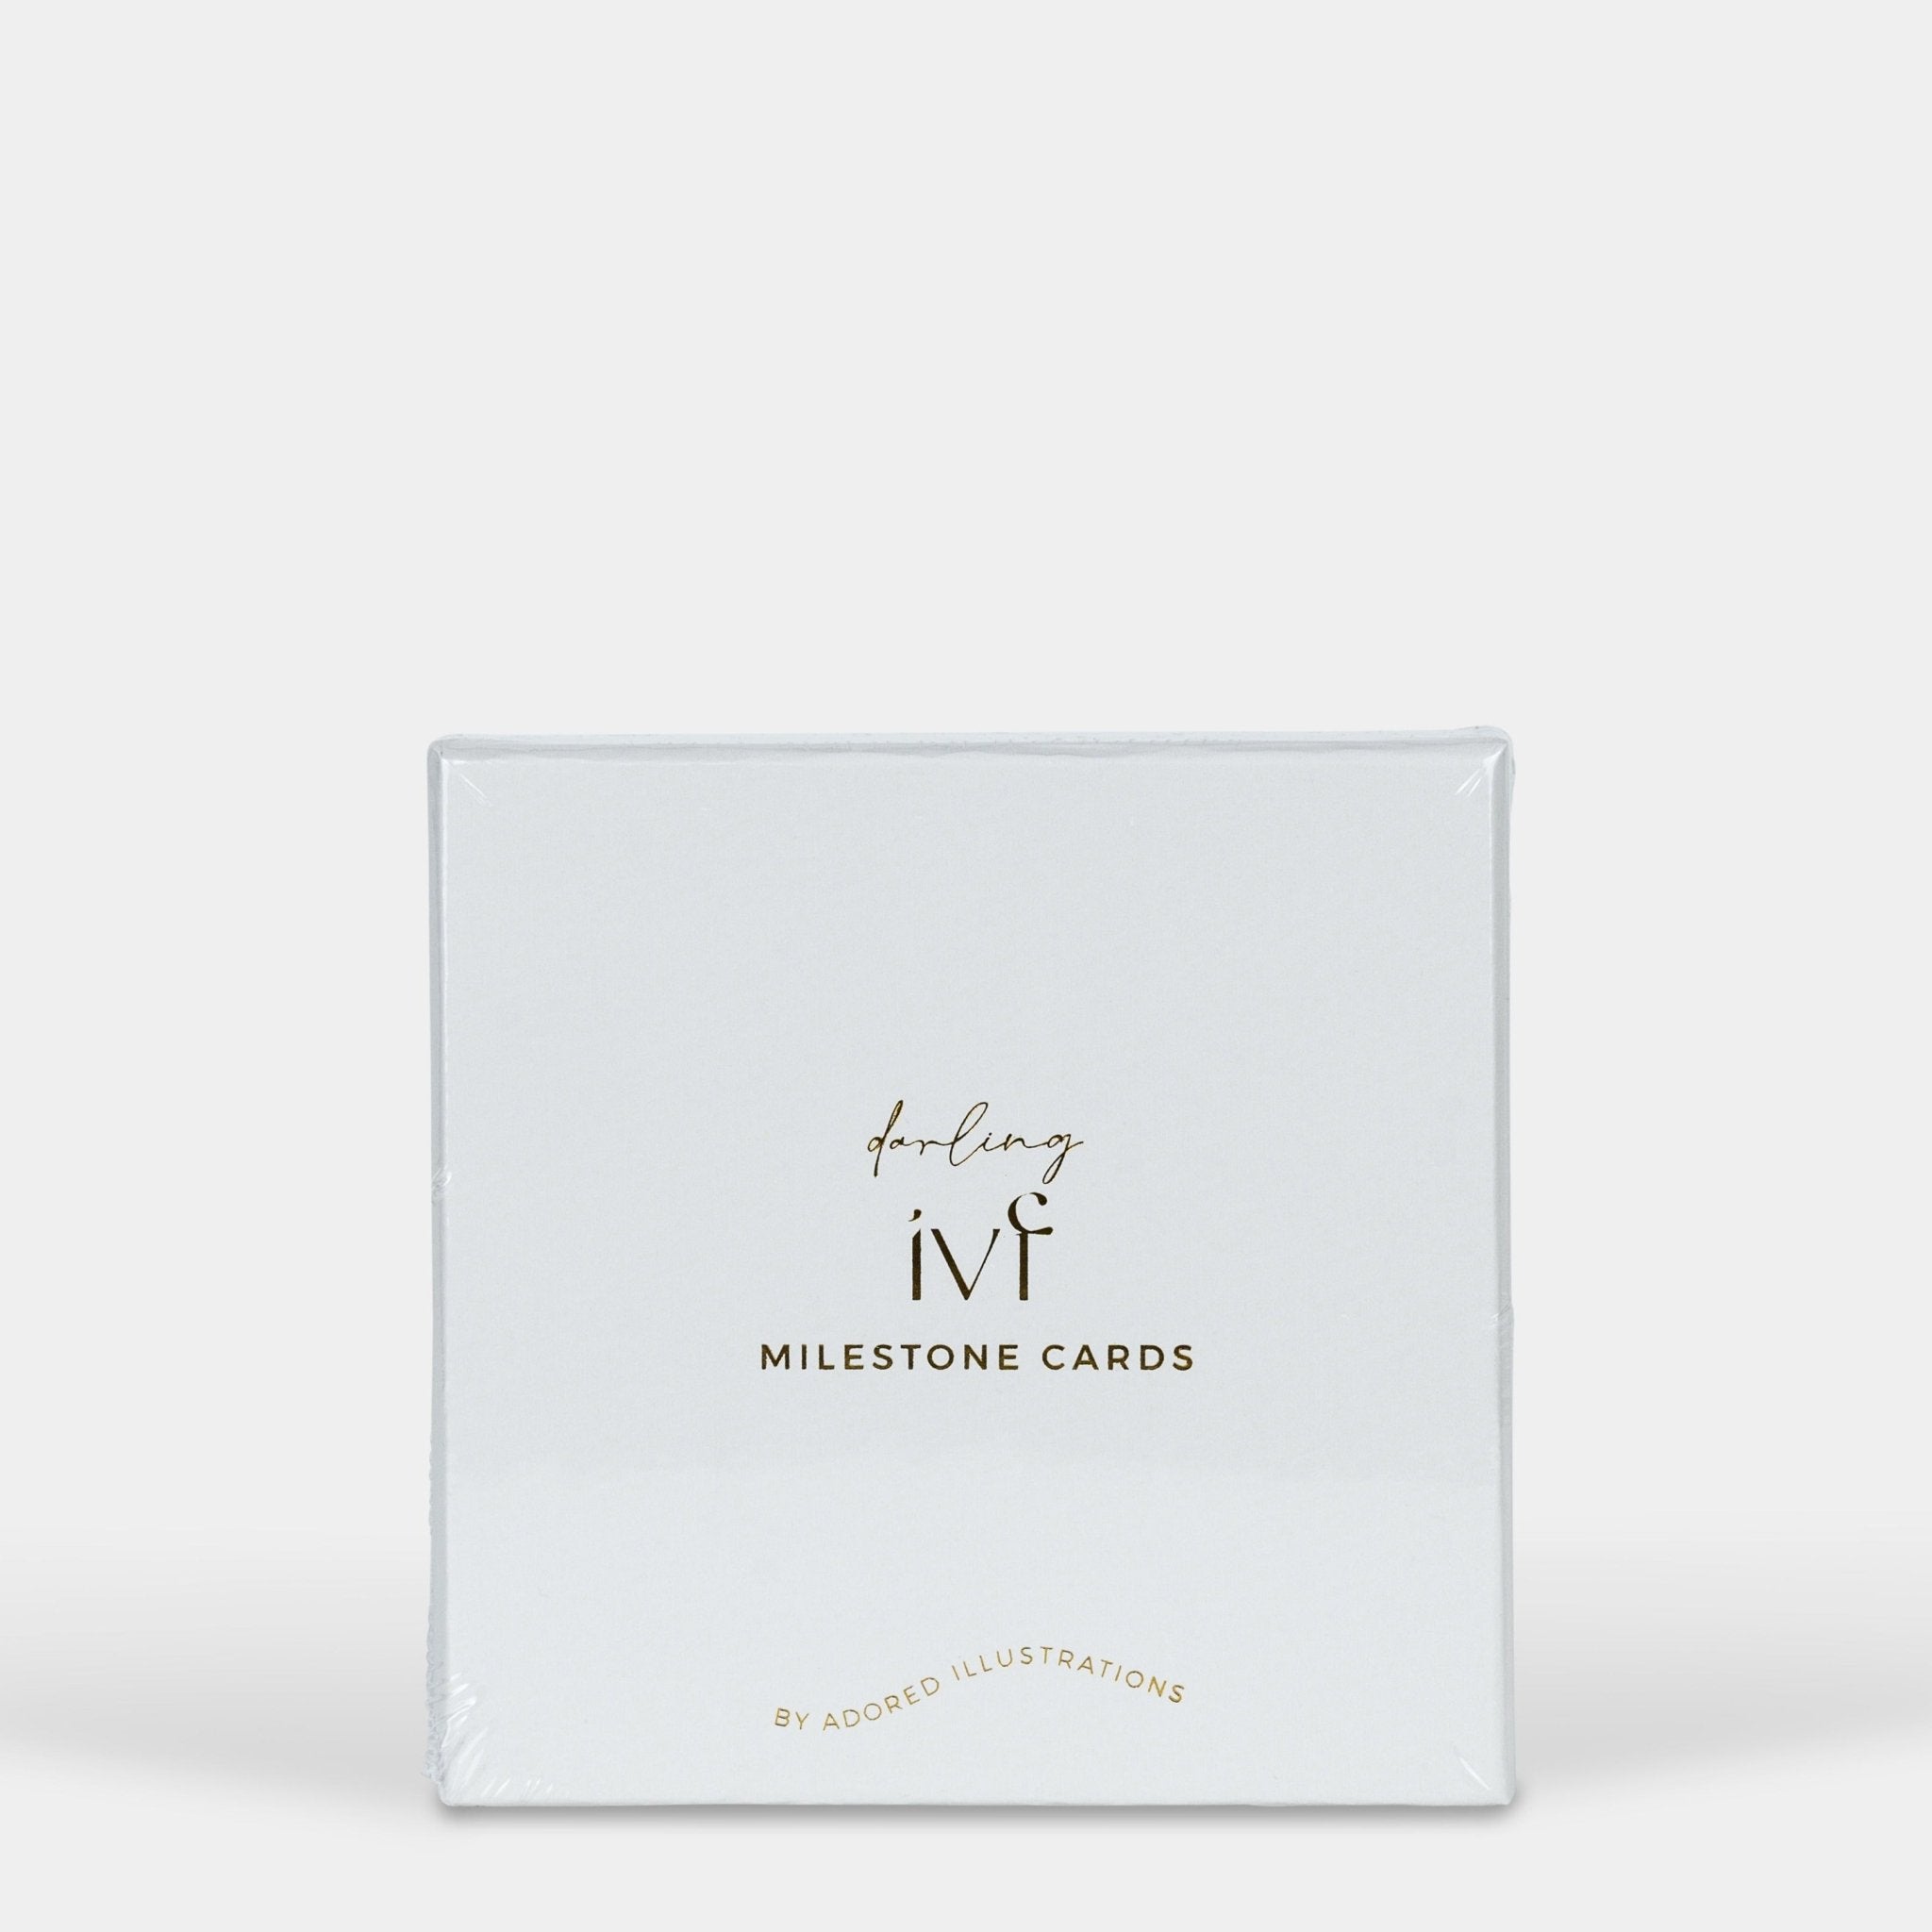 IVF Milestone Cards - The Birth Store-Adored Illustrations